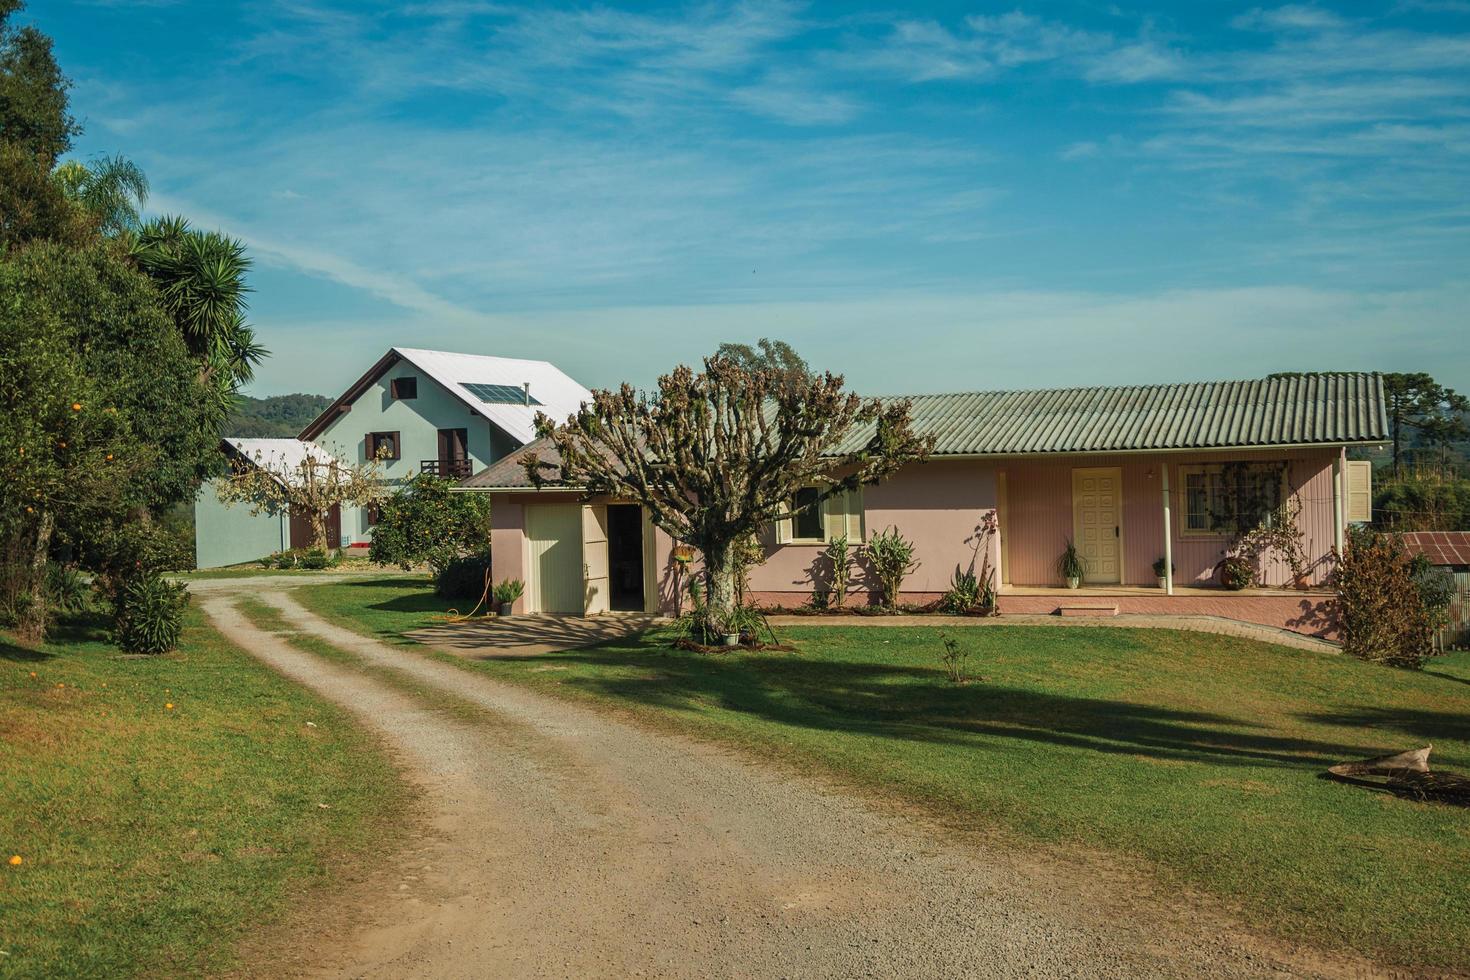 bento goncalves, brasil - 12 de julio de 2019. encantadora casa de campo moderna con camino y un exuberante jardín, en un paisaje rural cerca de bento goncalves. foto